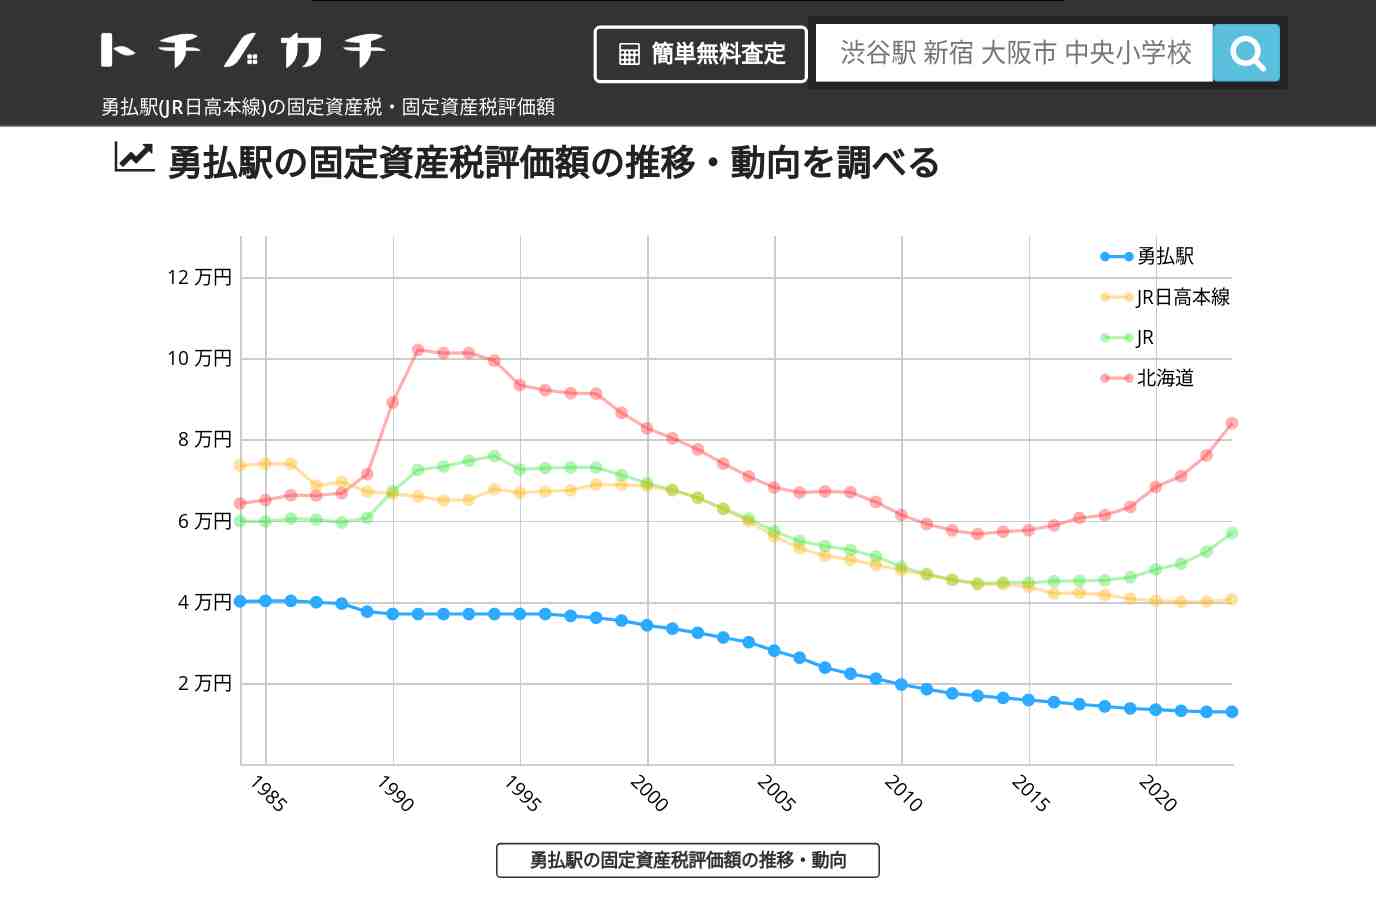 勇払駅(JR日高本線)の固定資産税・固定資産税評価額 | トチノカチ